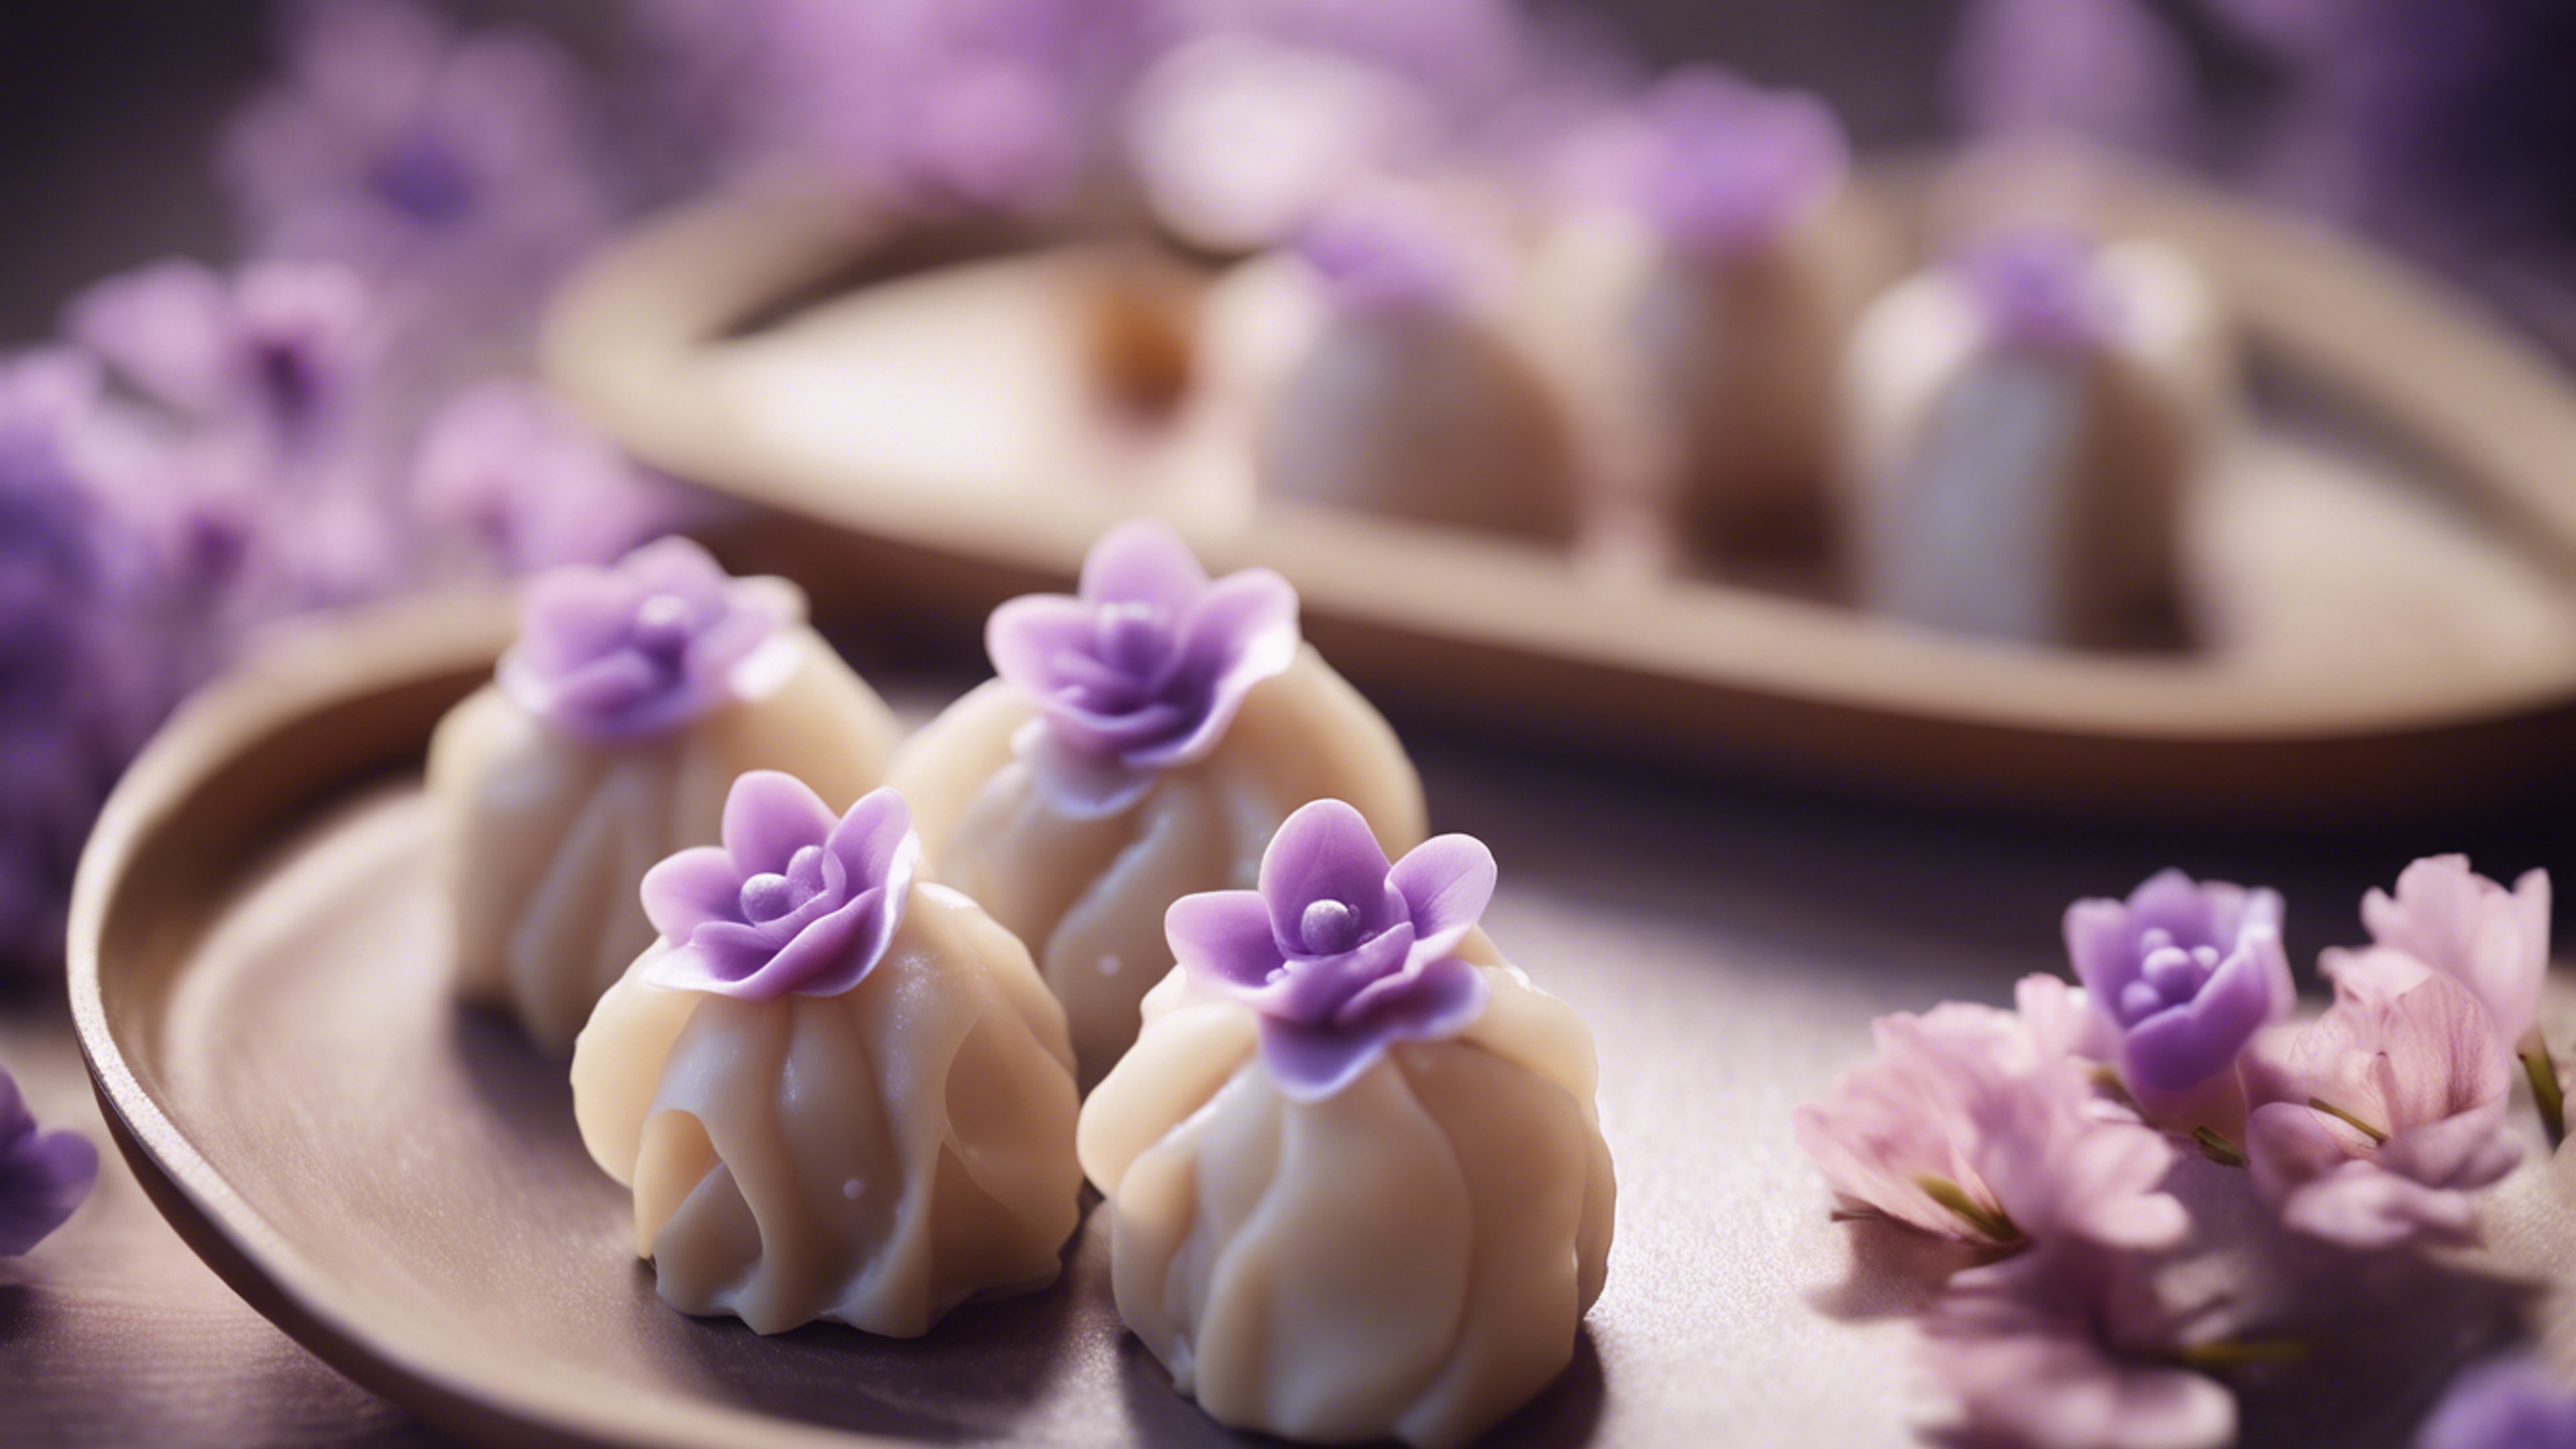 A kawaii styled dim sum dish, with delicate and light purple dumplings shaped like flowers. ورق الجدران[29e111c9b013403690b4]